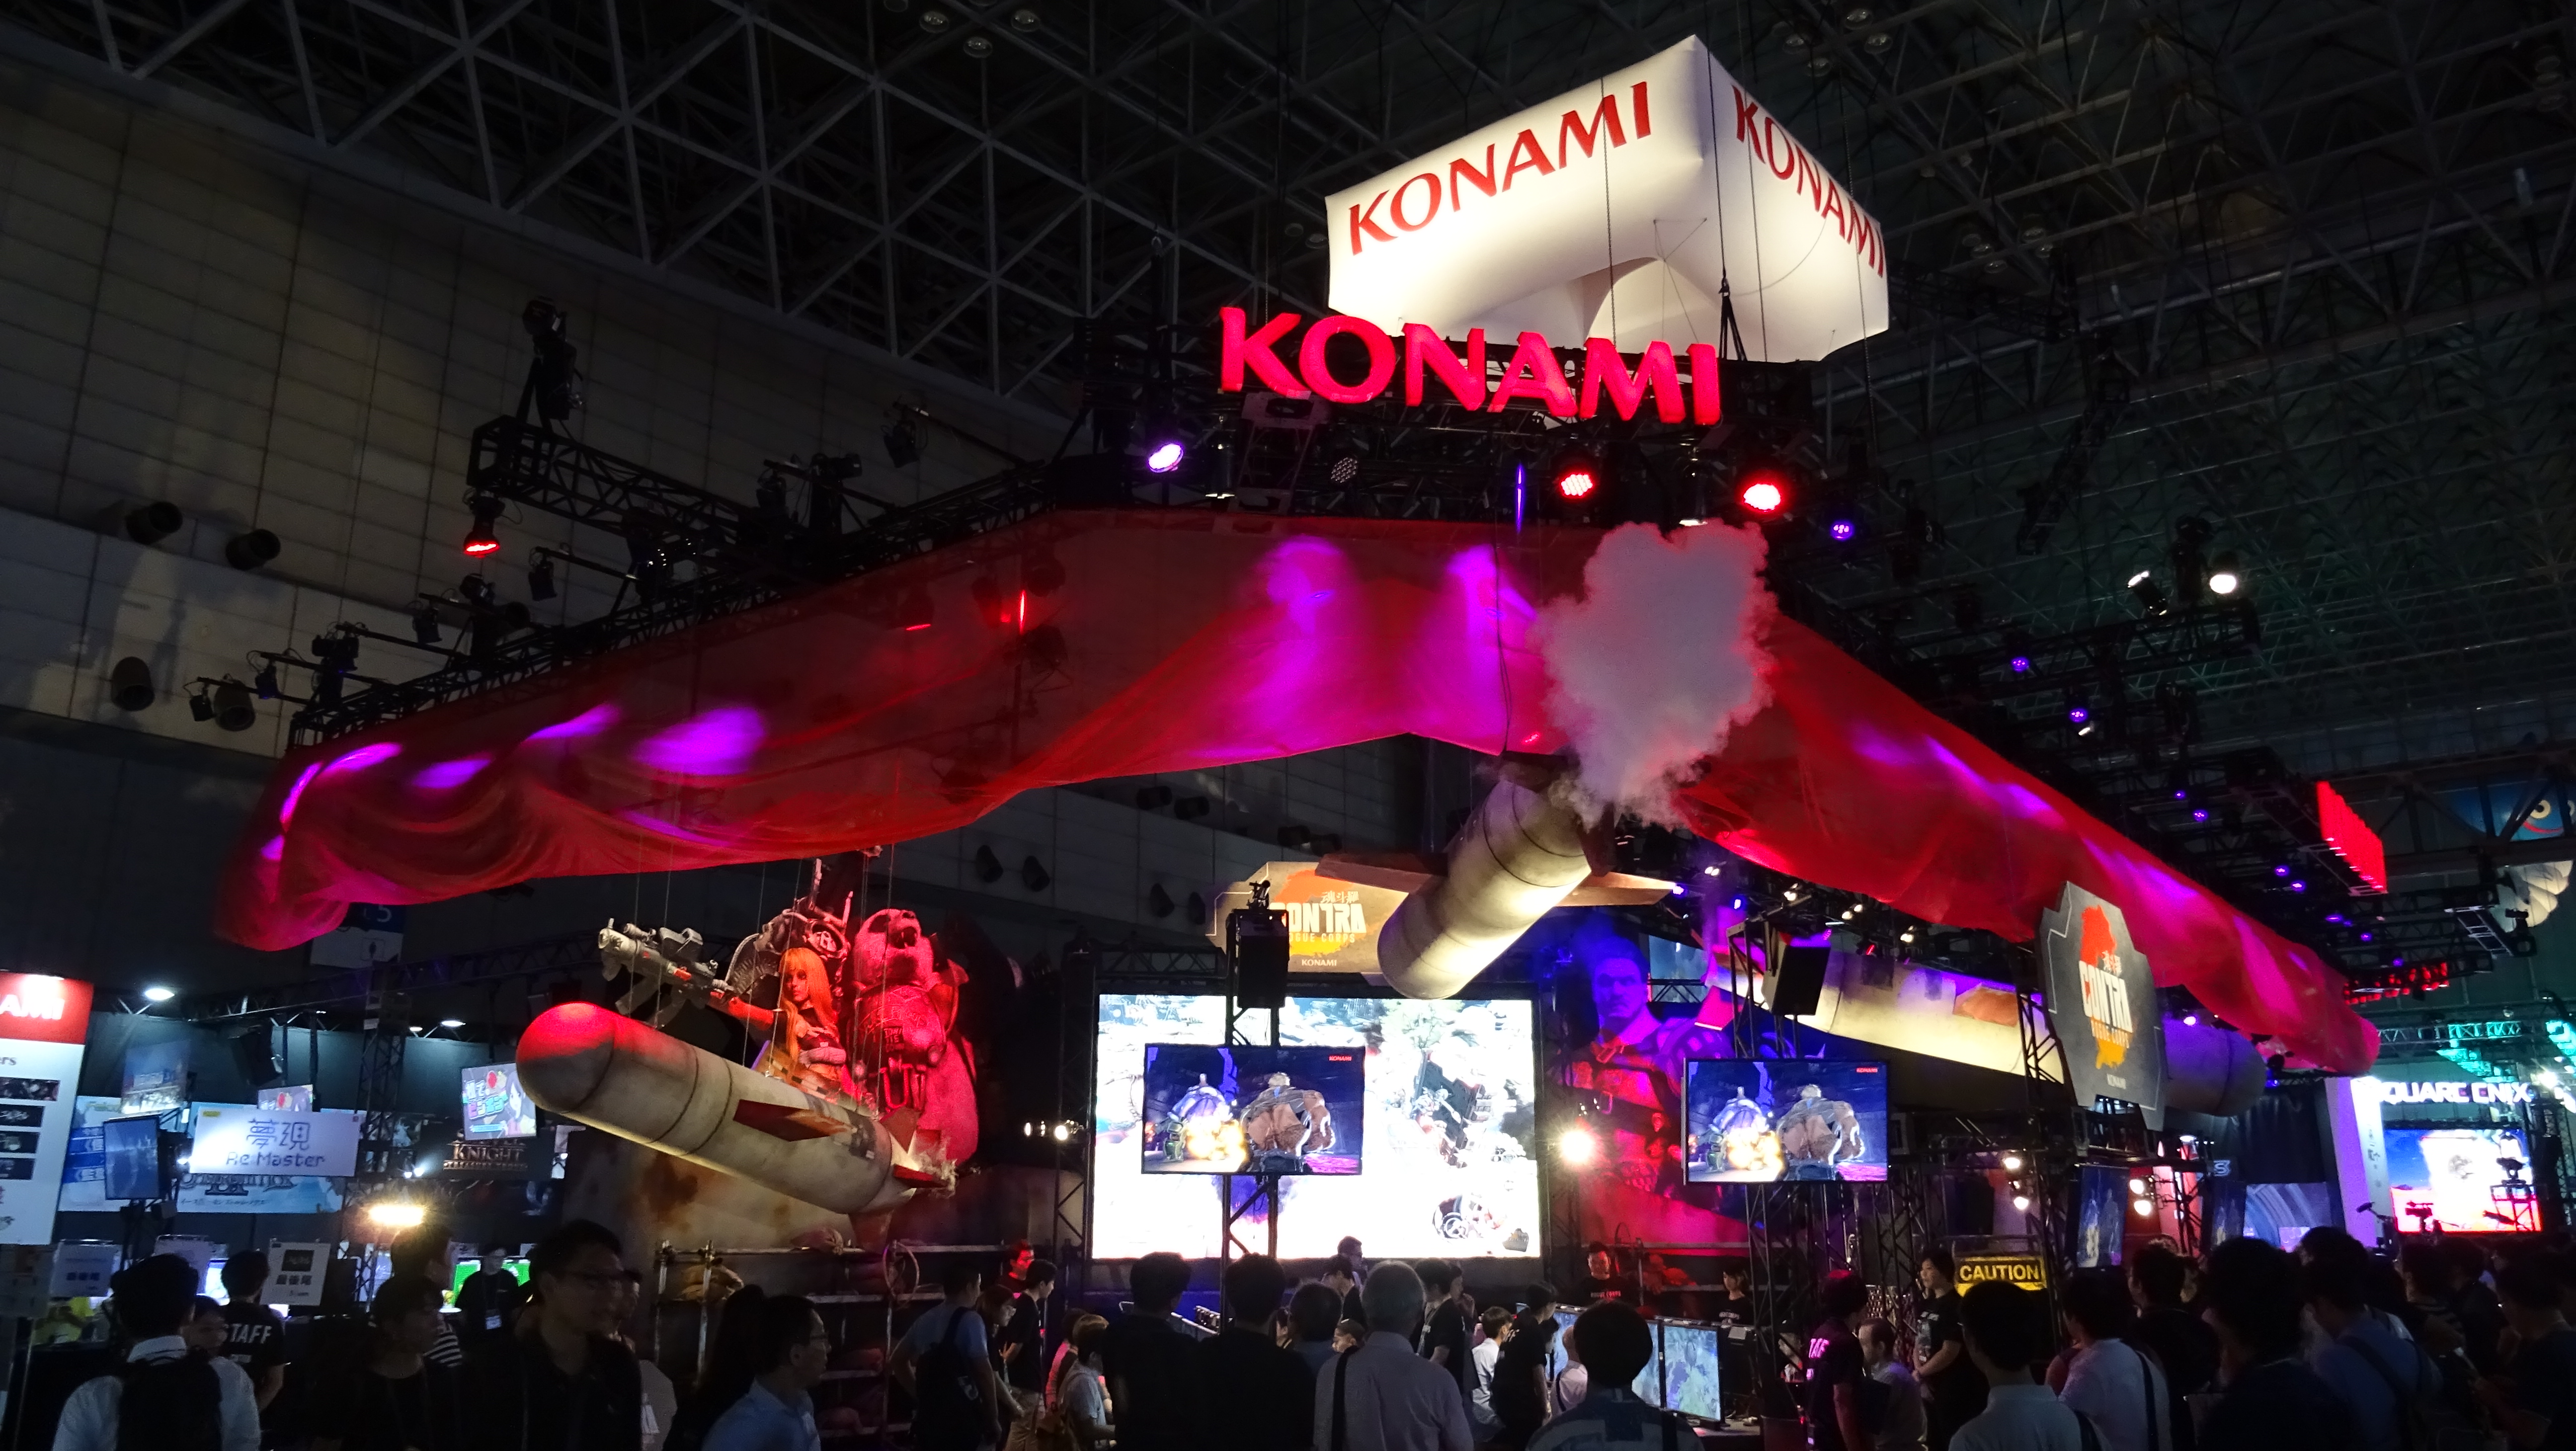 TGS 2019: Konami Shows Plenty of Mobile Games, but Few Will Leave Japan